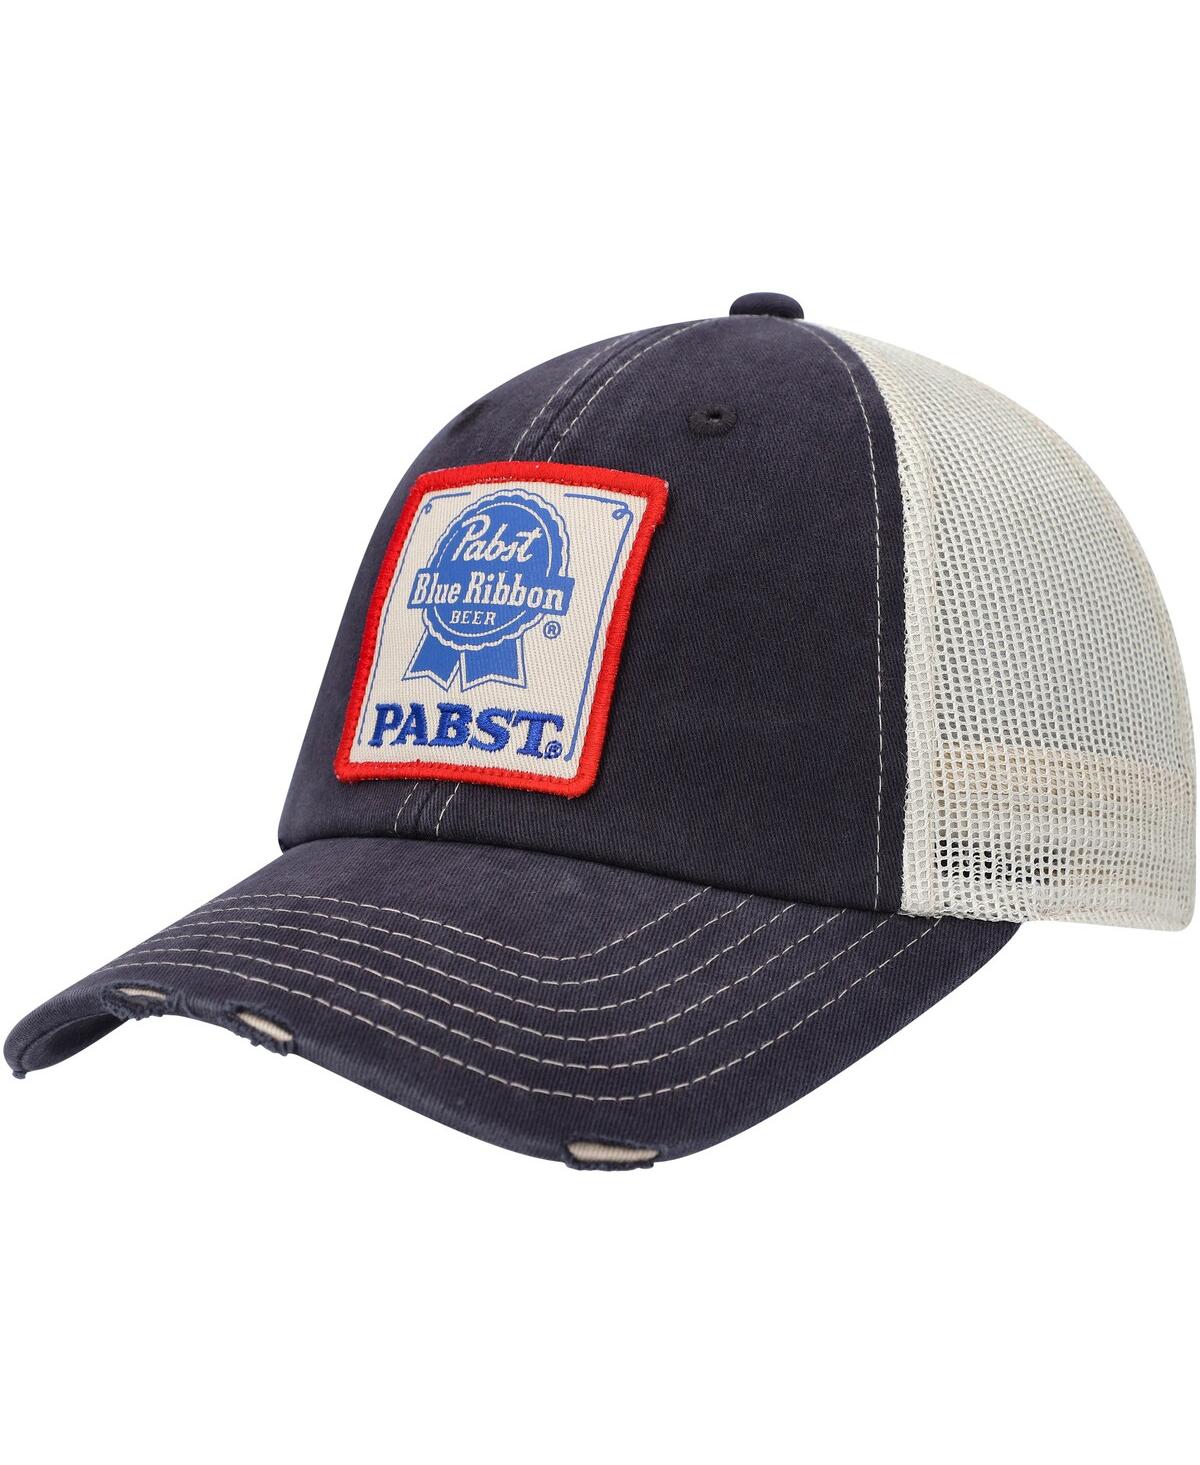 Men's American Needle Navy, Cream Pabst Blue Ribbon Orville Snapback Hat - Navy, Cream